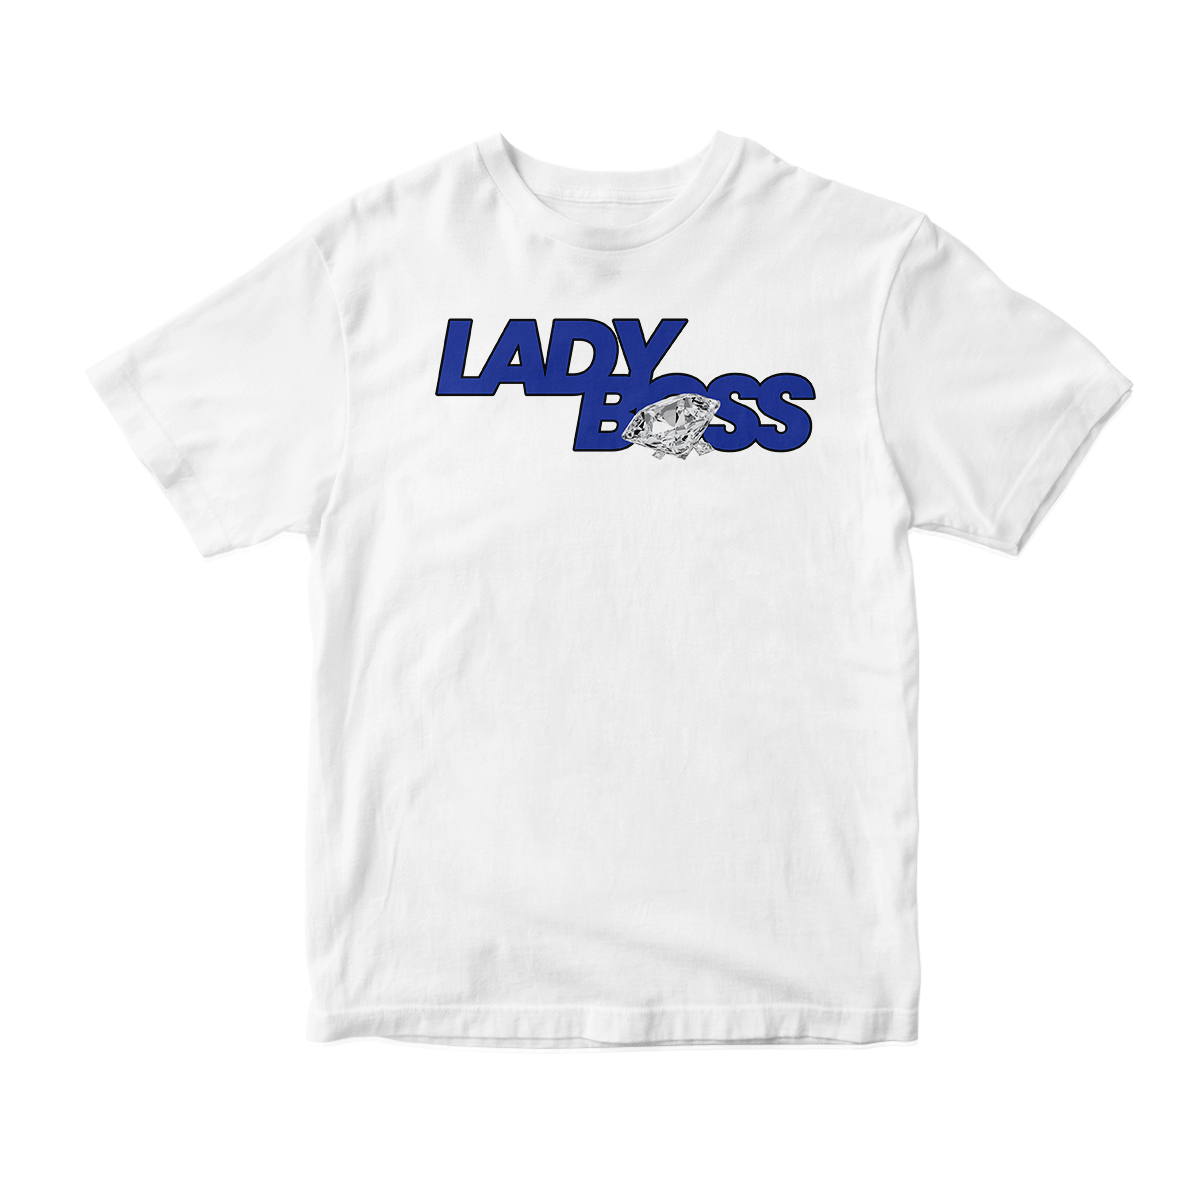 'Lady Boss' in Hyper Royal CW Short Sleeve Tee